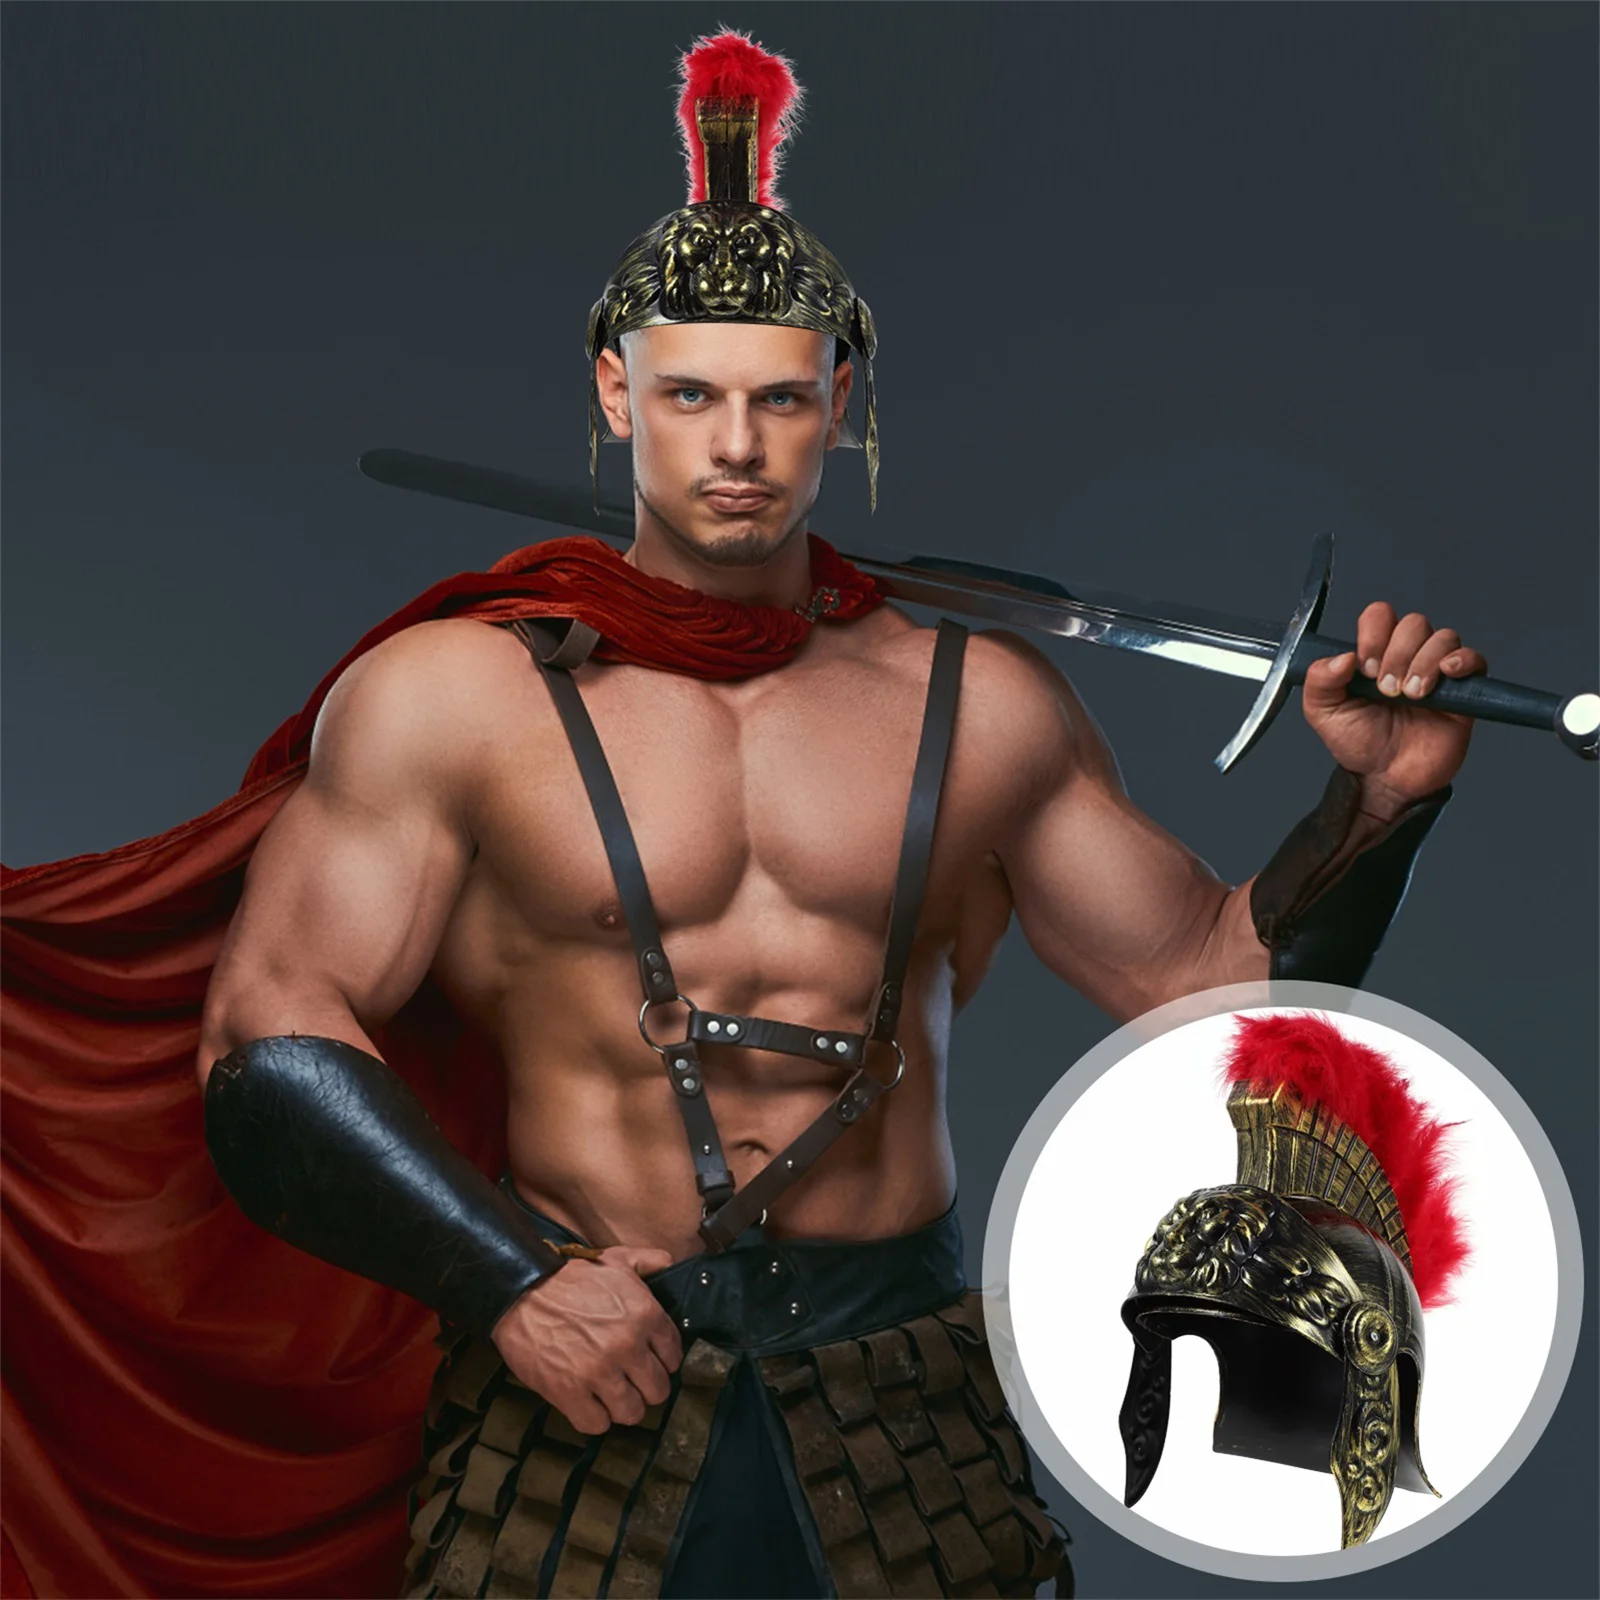 

Samurai Hat Men Gladiator Middle Ages Adults Roman Costume Soldier Warrior Cosplay Ihram Clothing Umrah